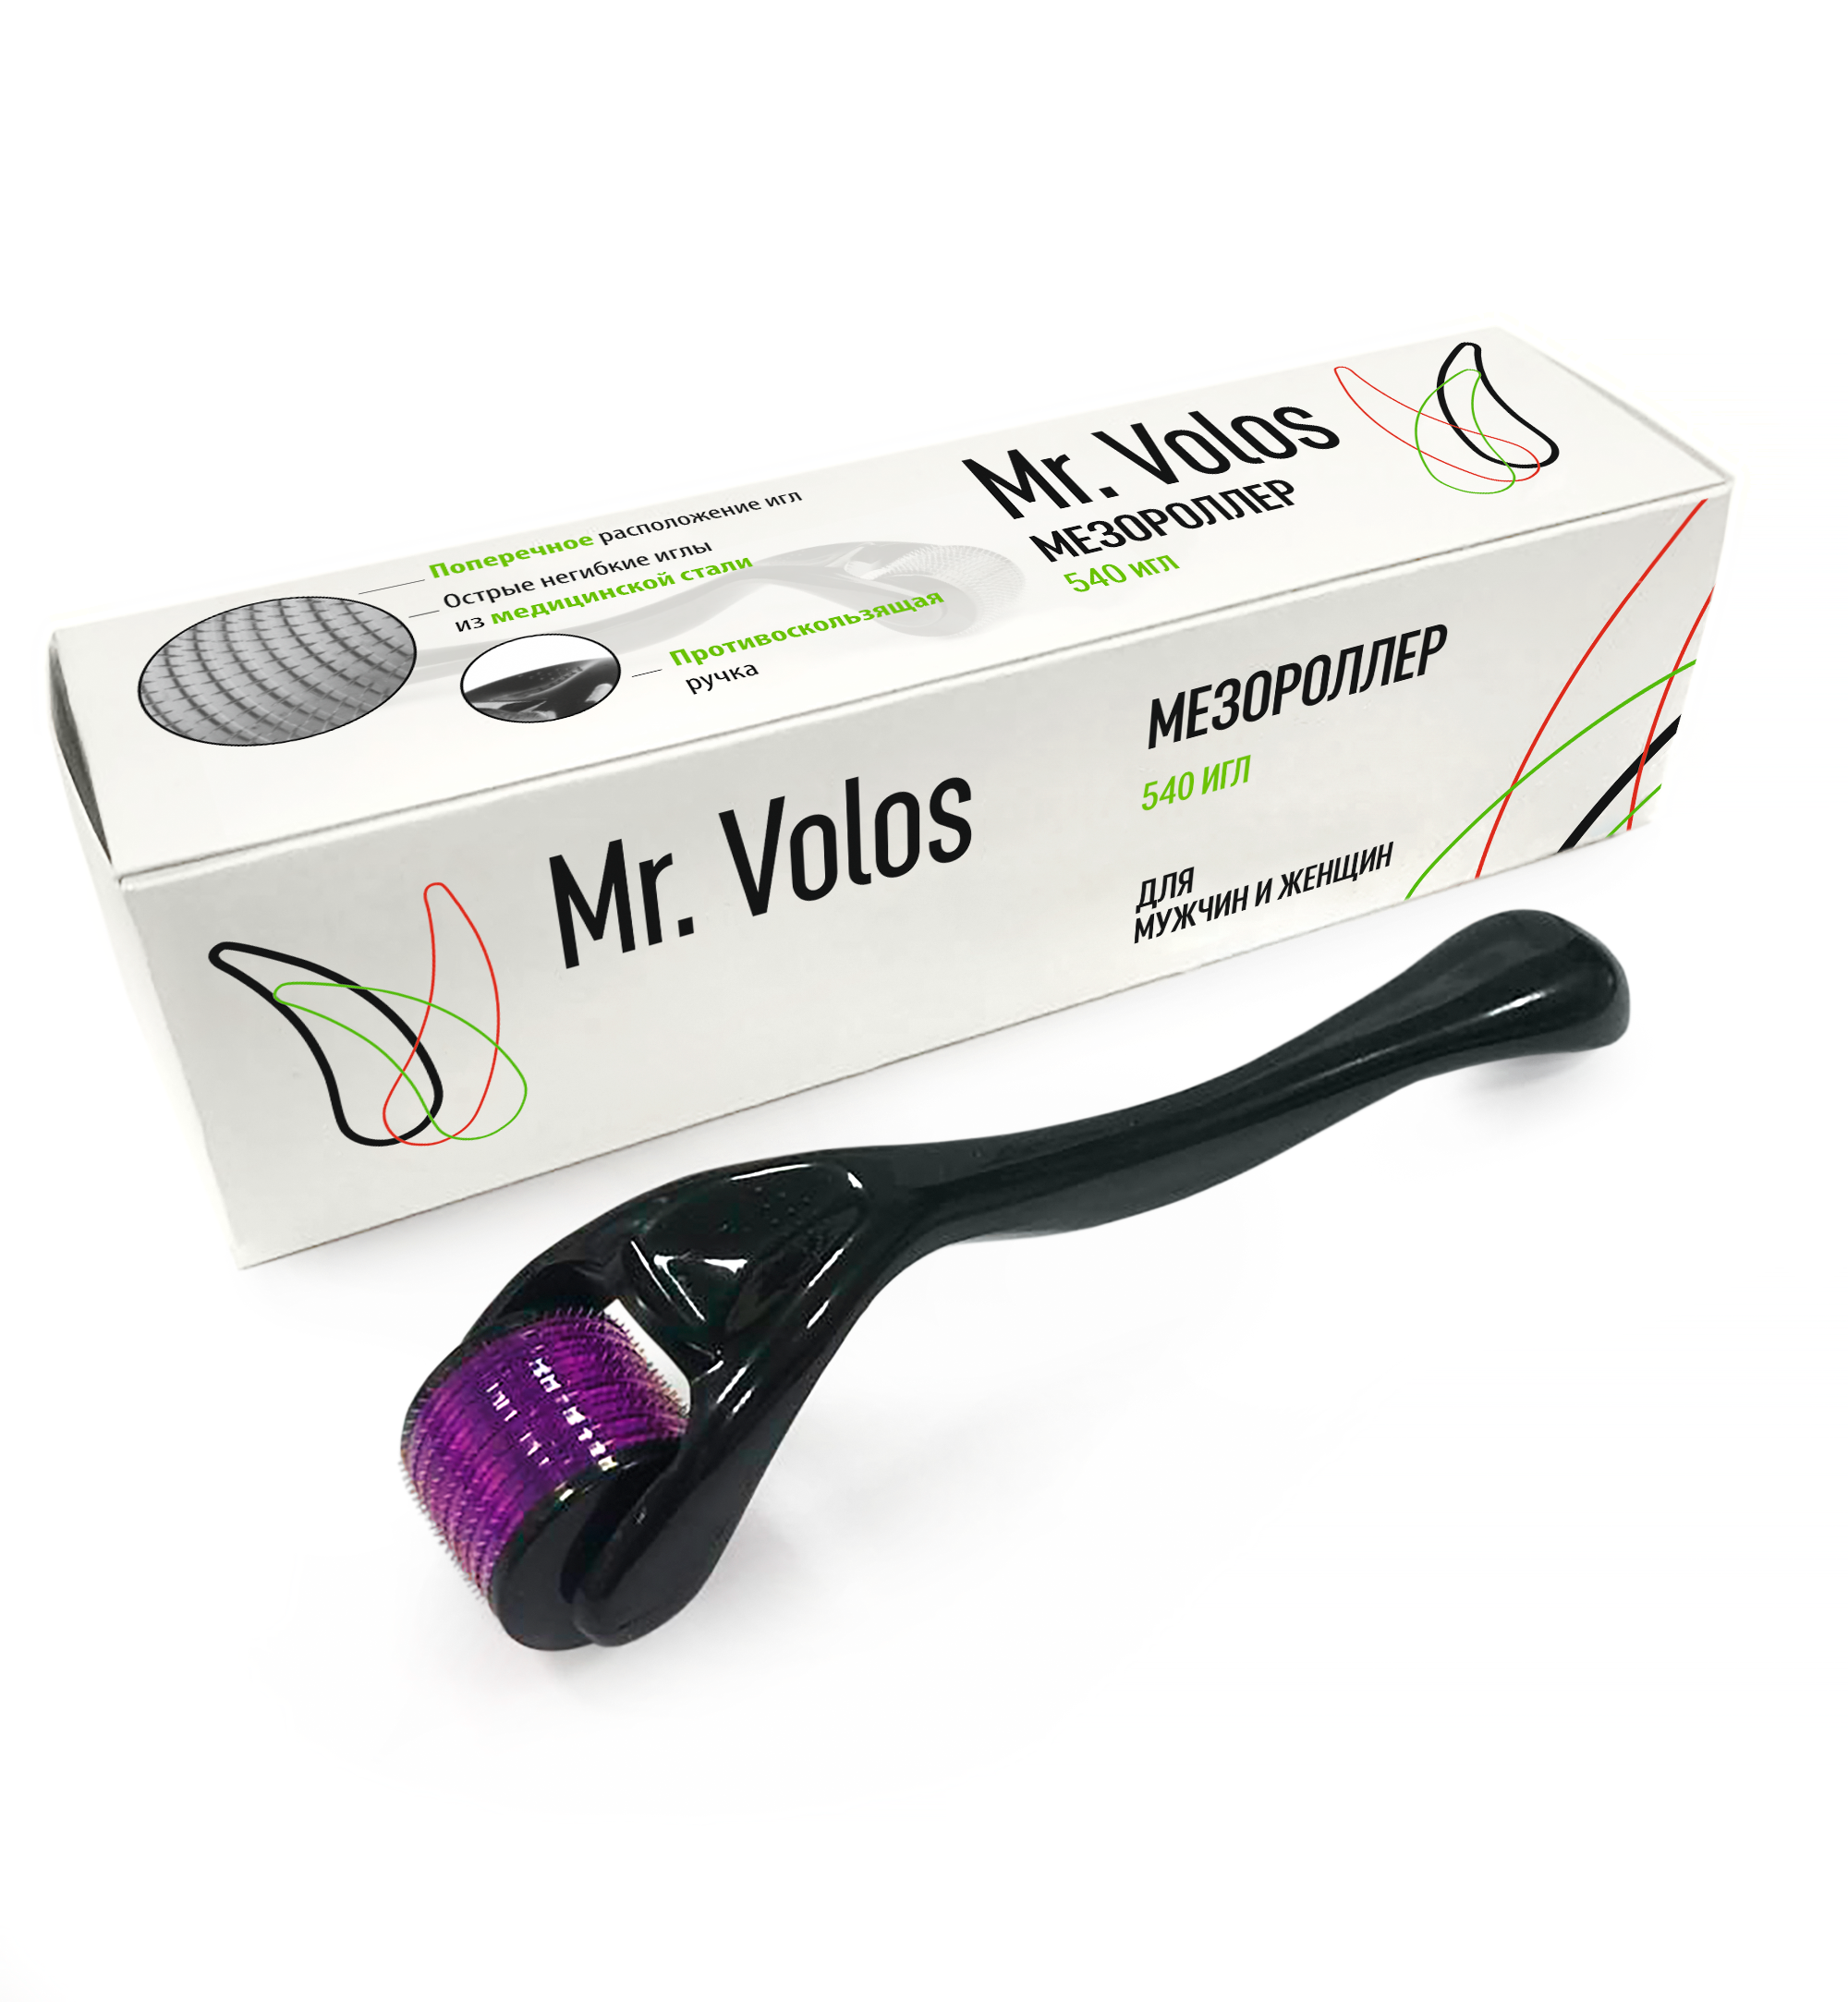 

Мезороллер Mr. Volos 1 мм иглы + кейс для хранения